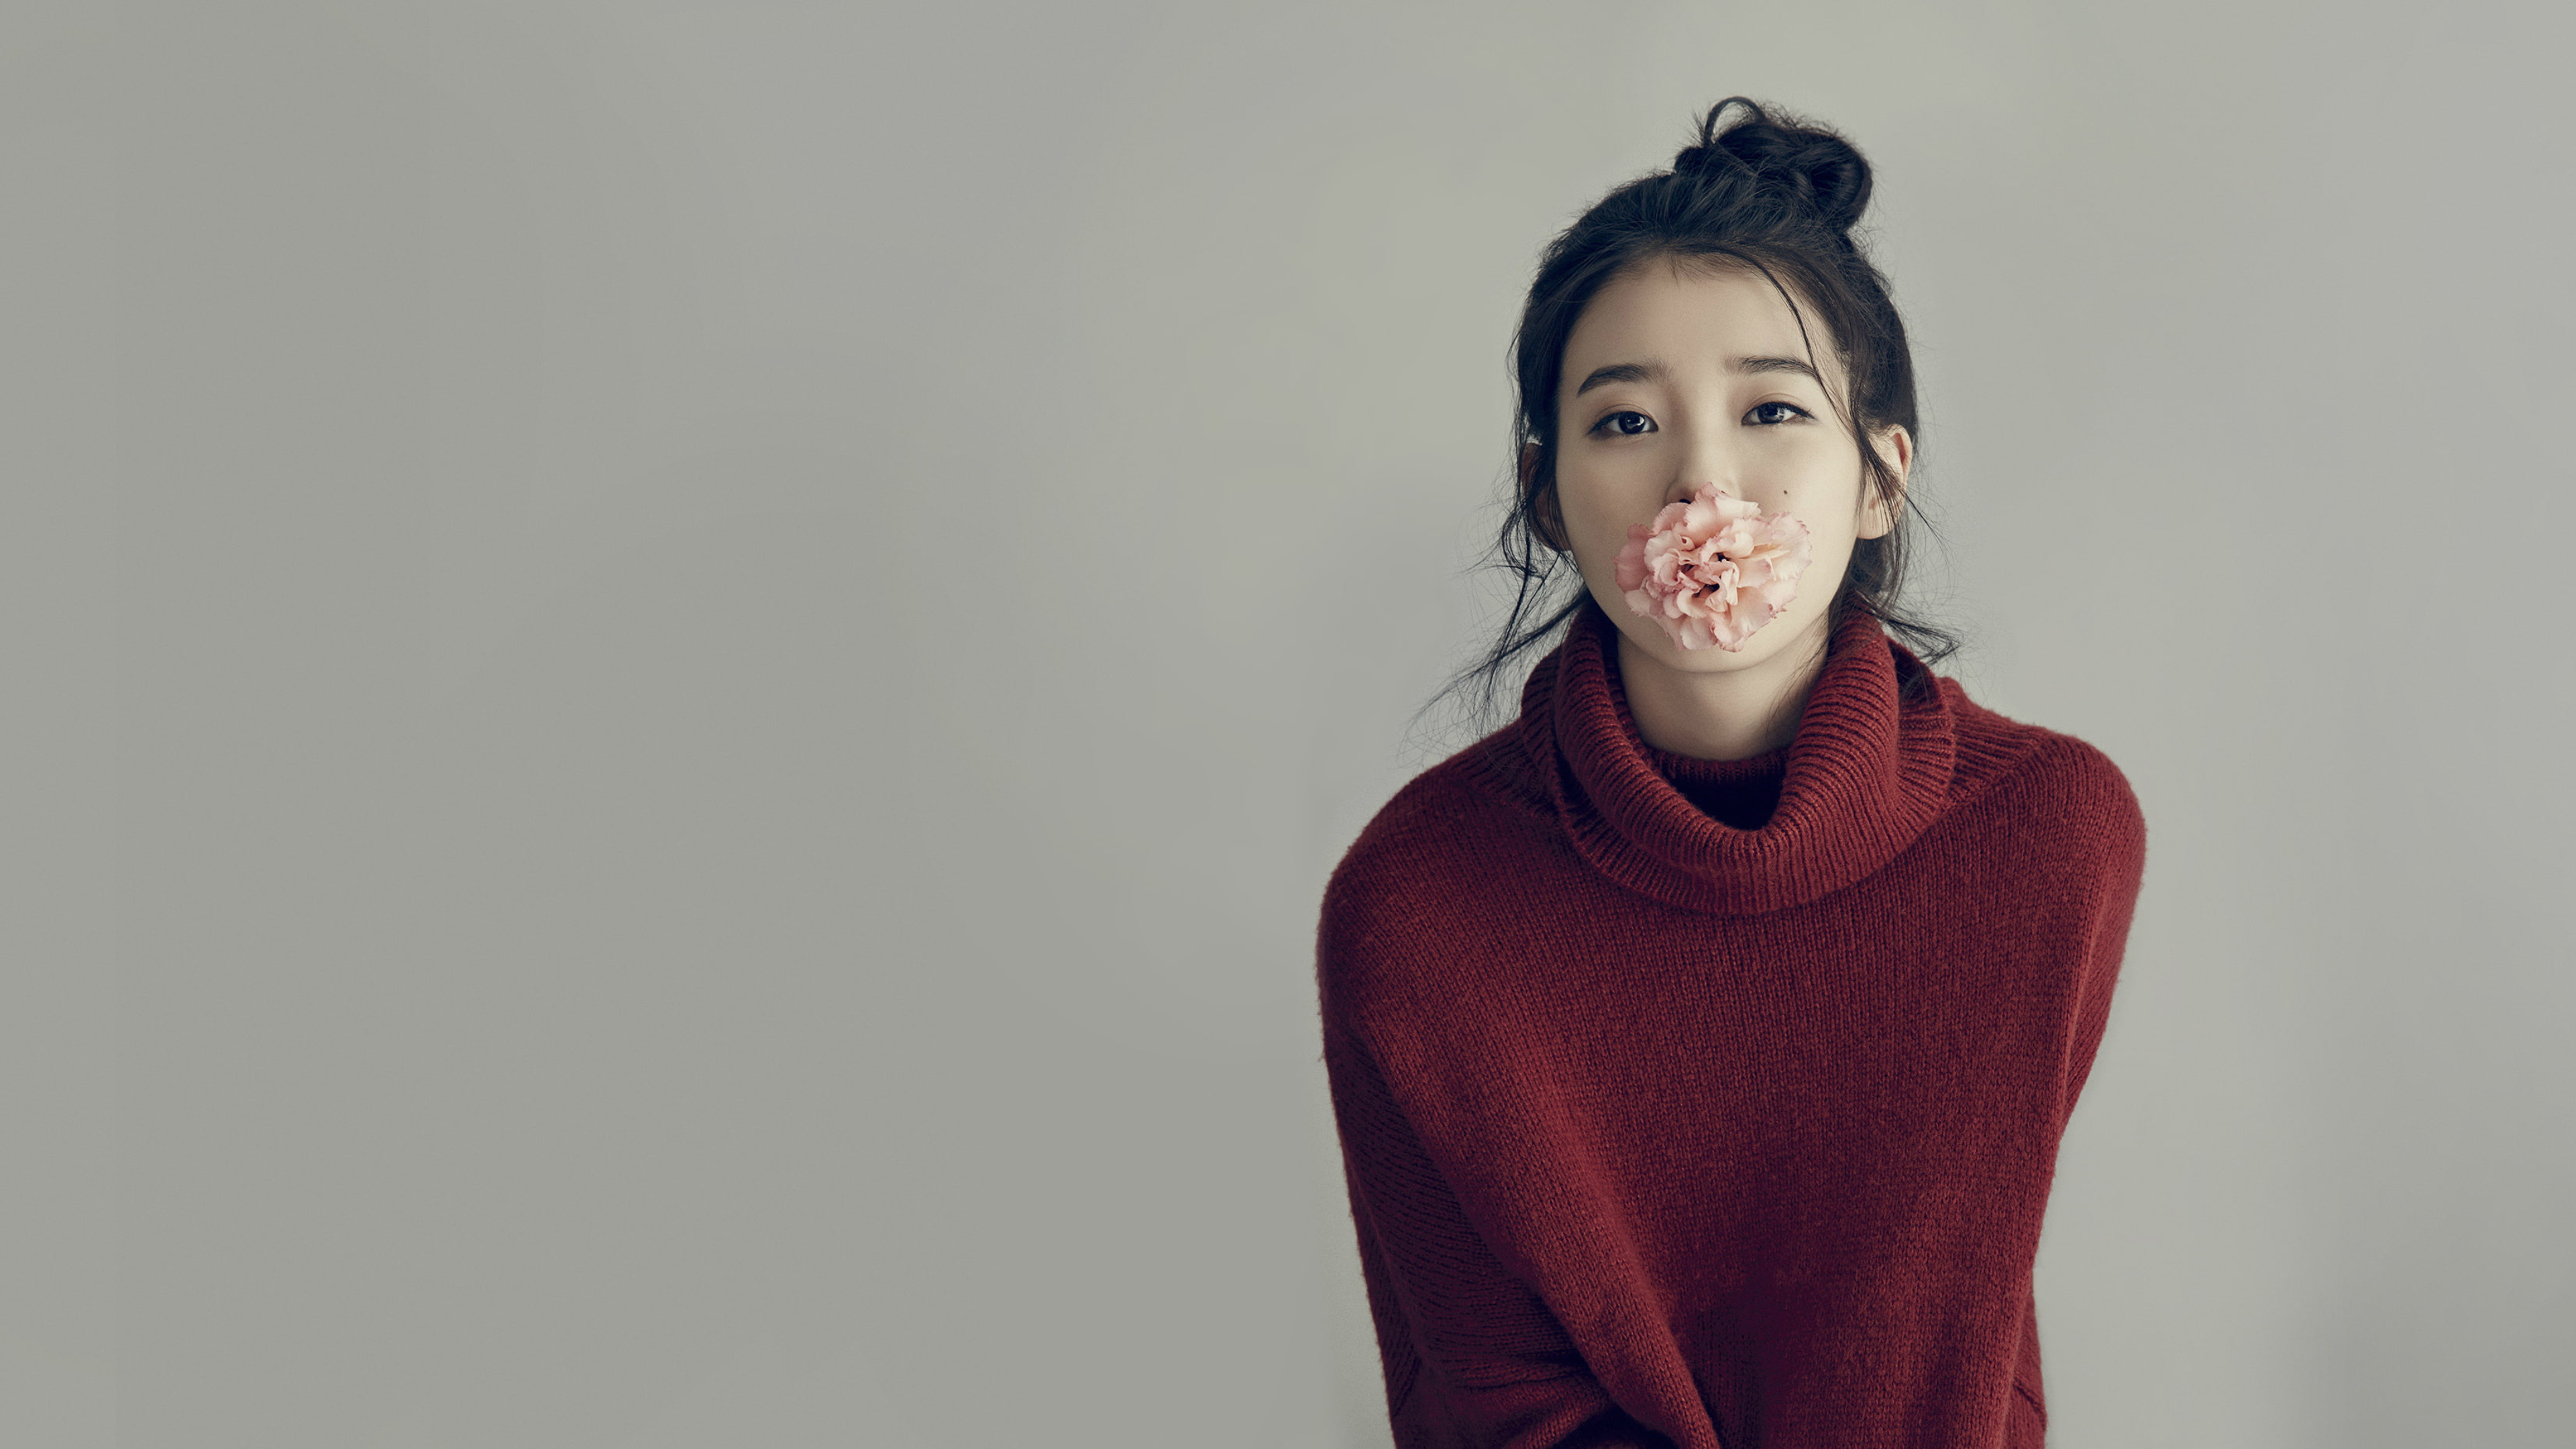 Iu Lee Ji Eun IU Red Shirt Looking At Viewer Korean Asian Flowers Hair Knot Pullover Gray Background 3840x2160